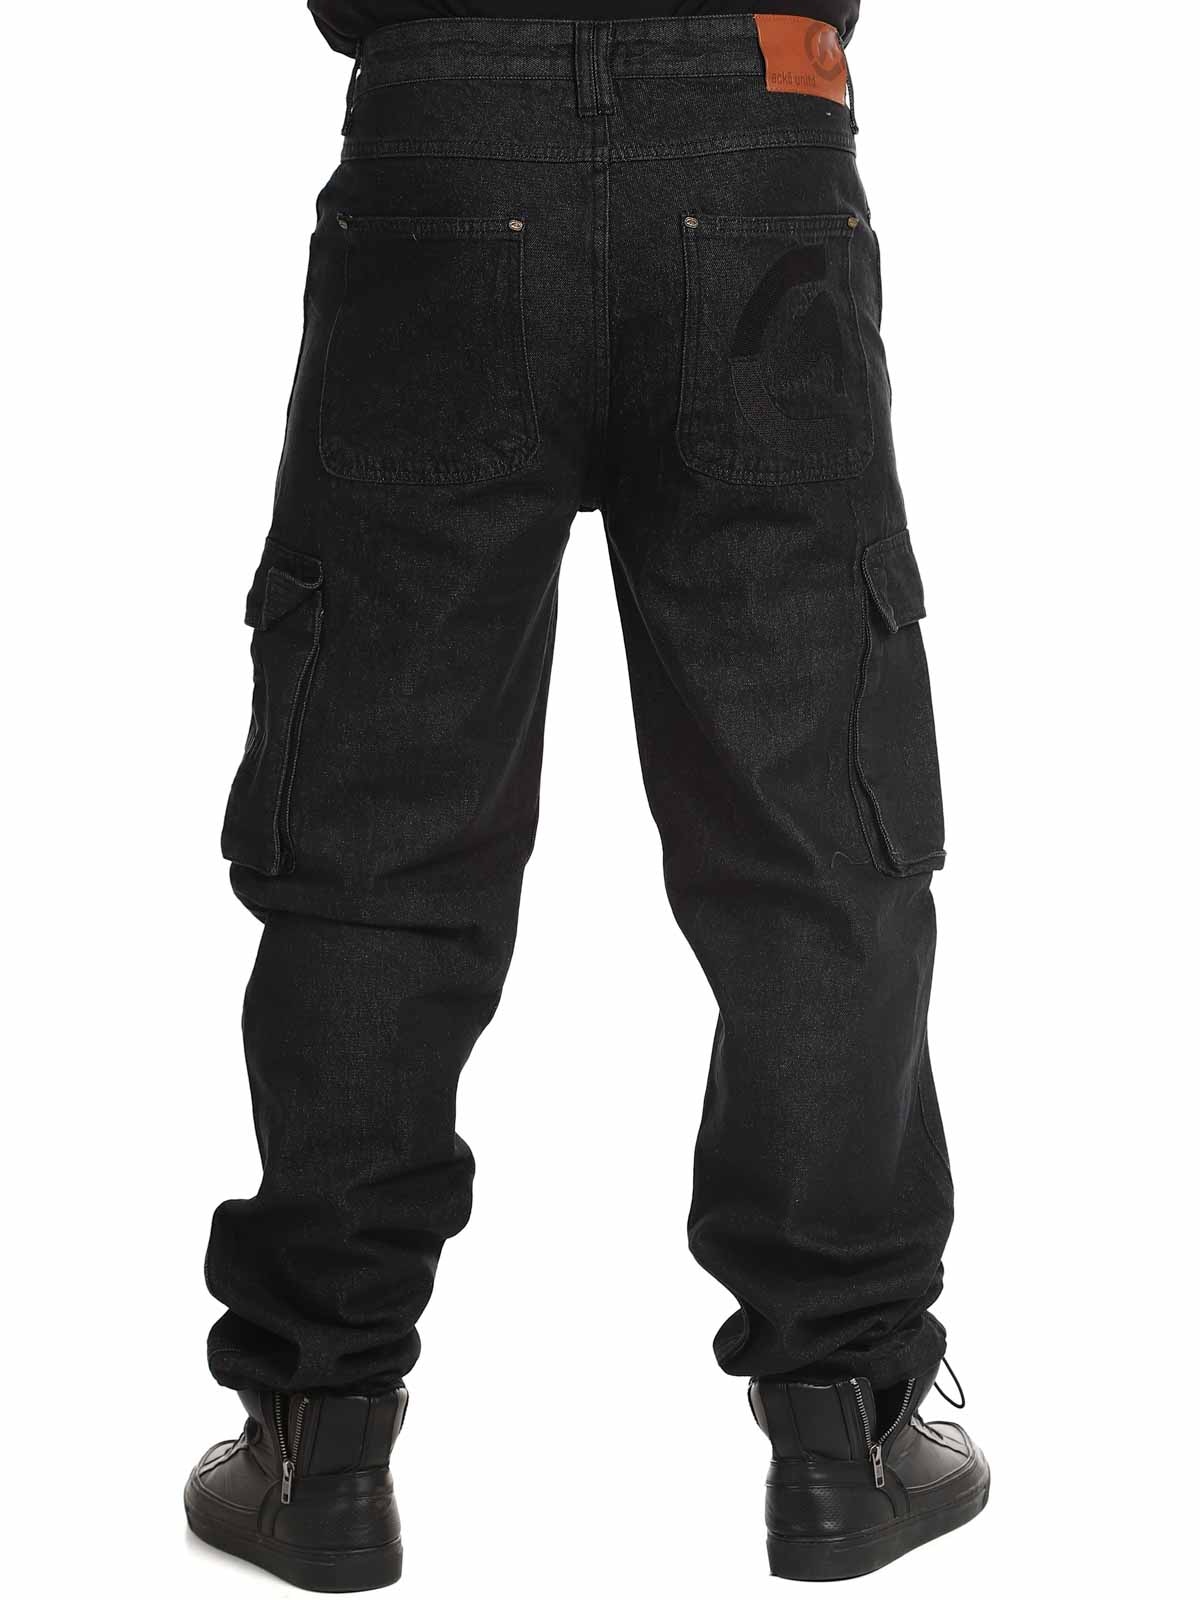 Ecko-unitd-jeans7.jpg